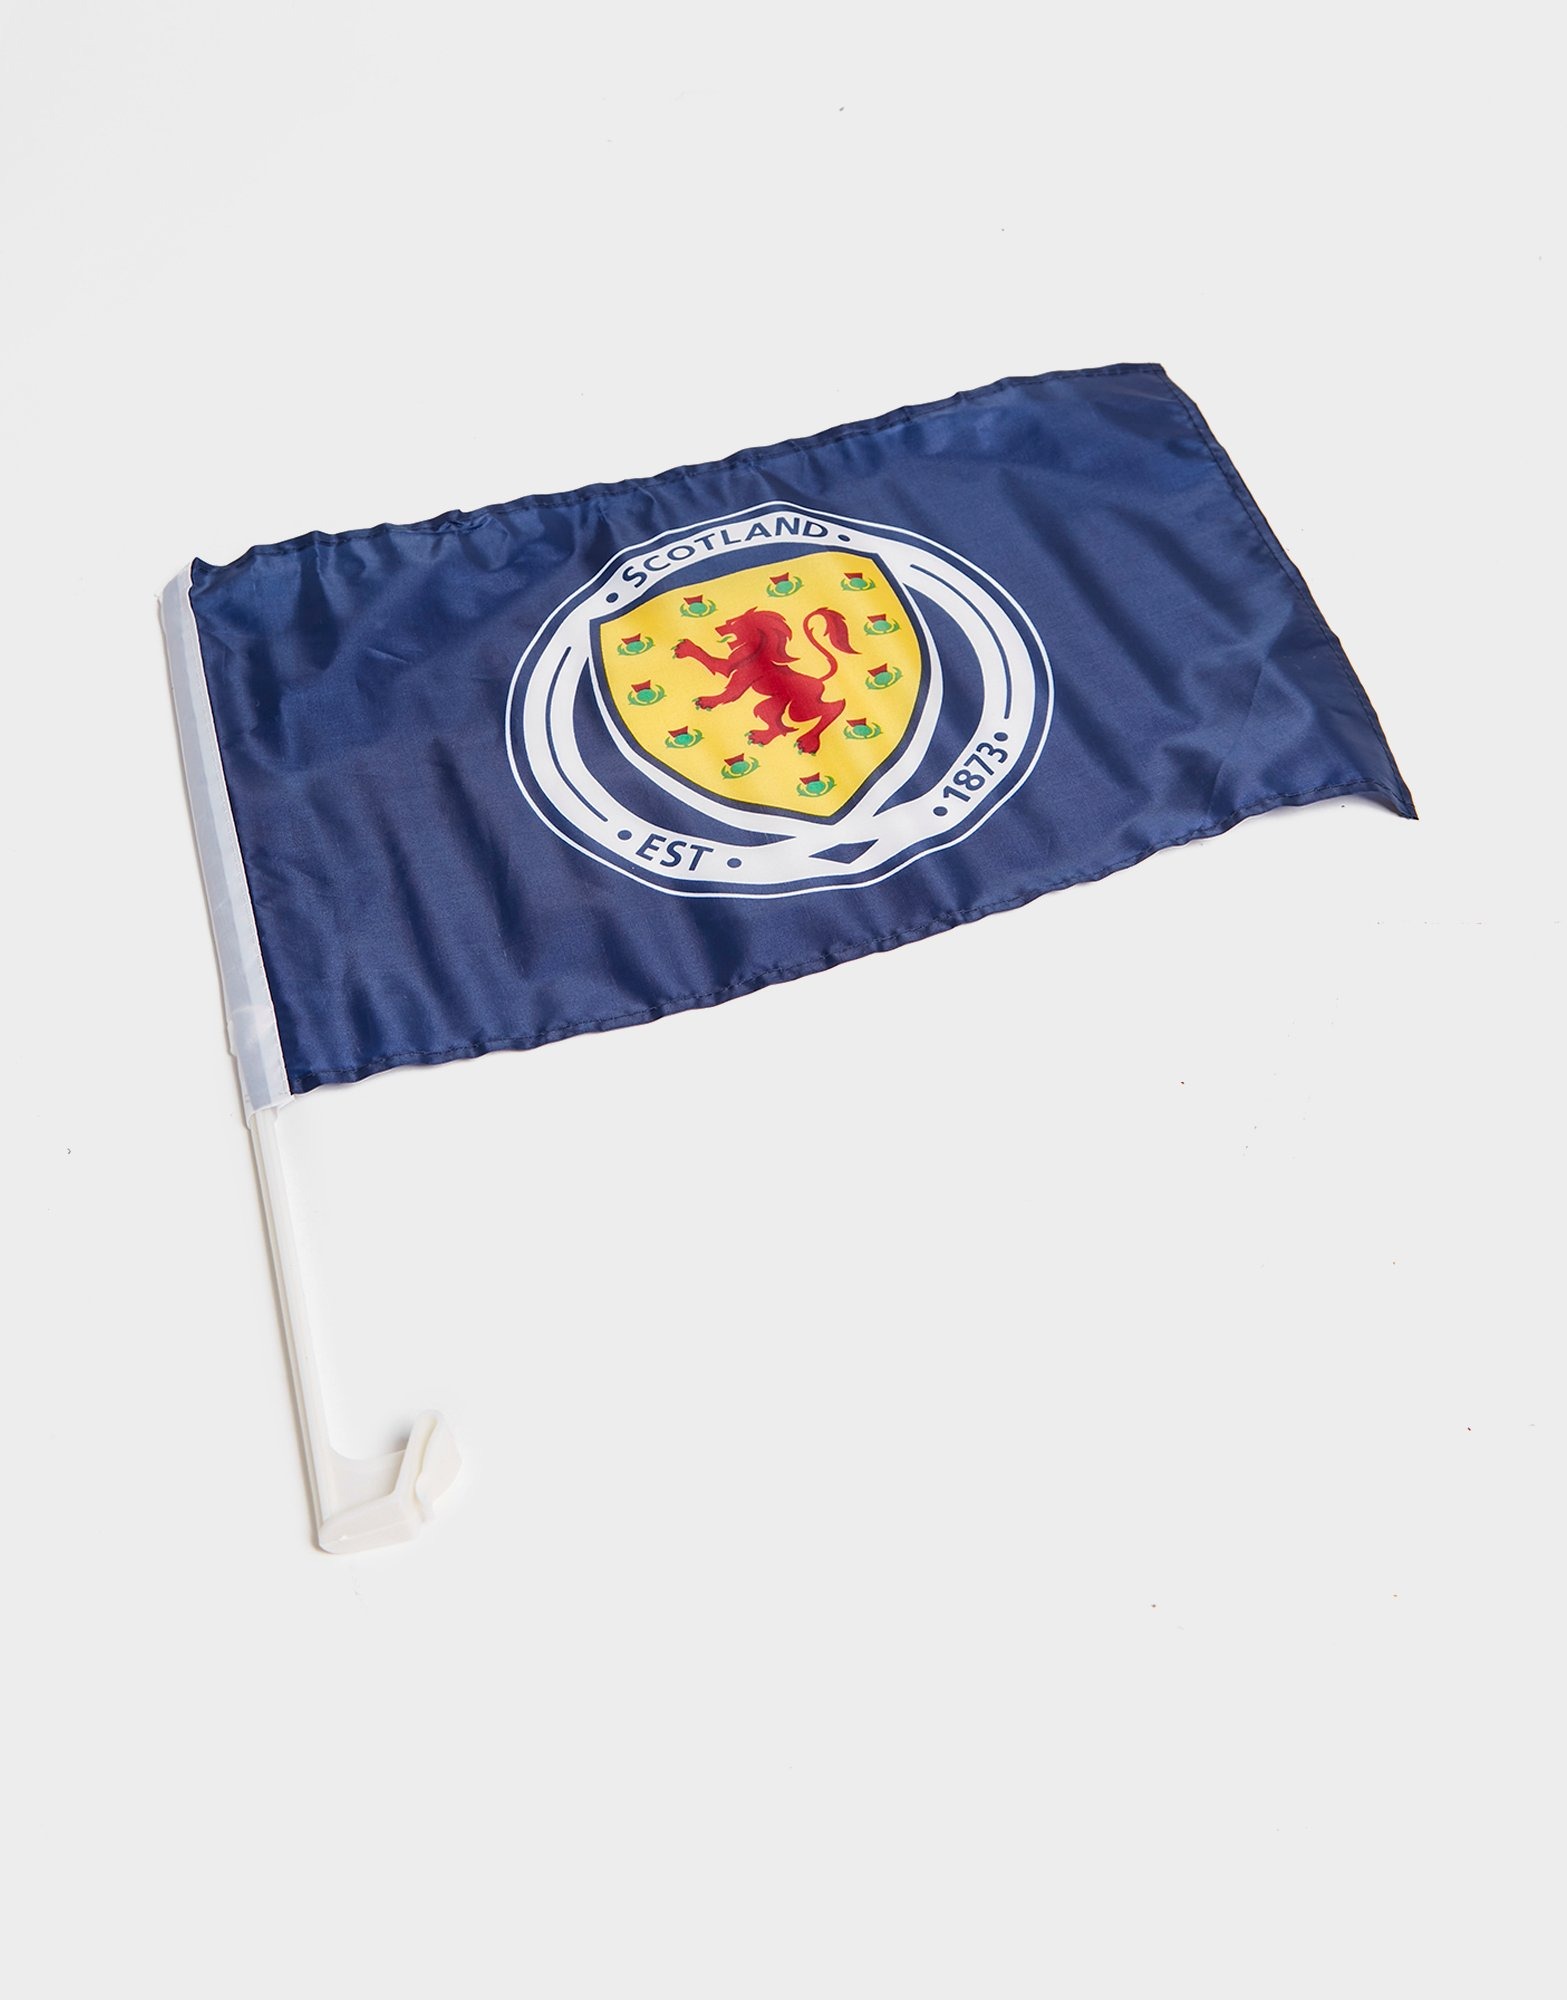 New design . Scotland Car Flag £3.50 or 2 for £6.00 including postage 